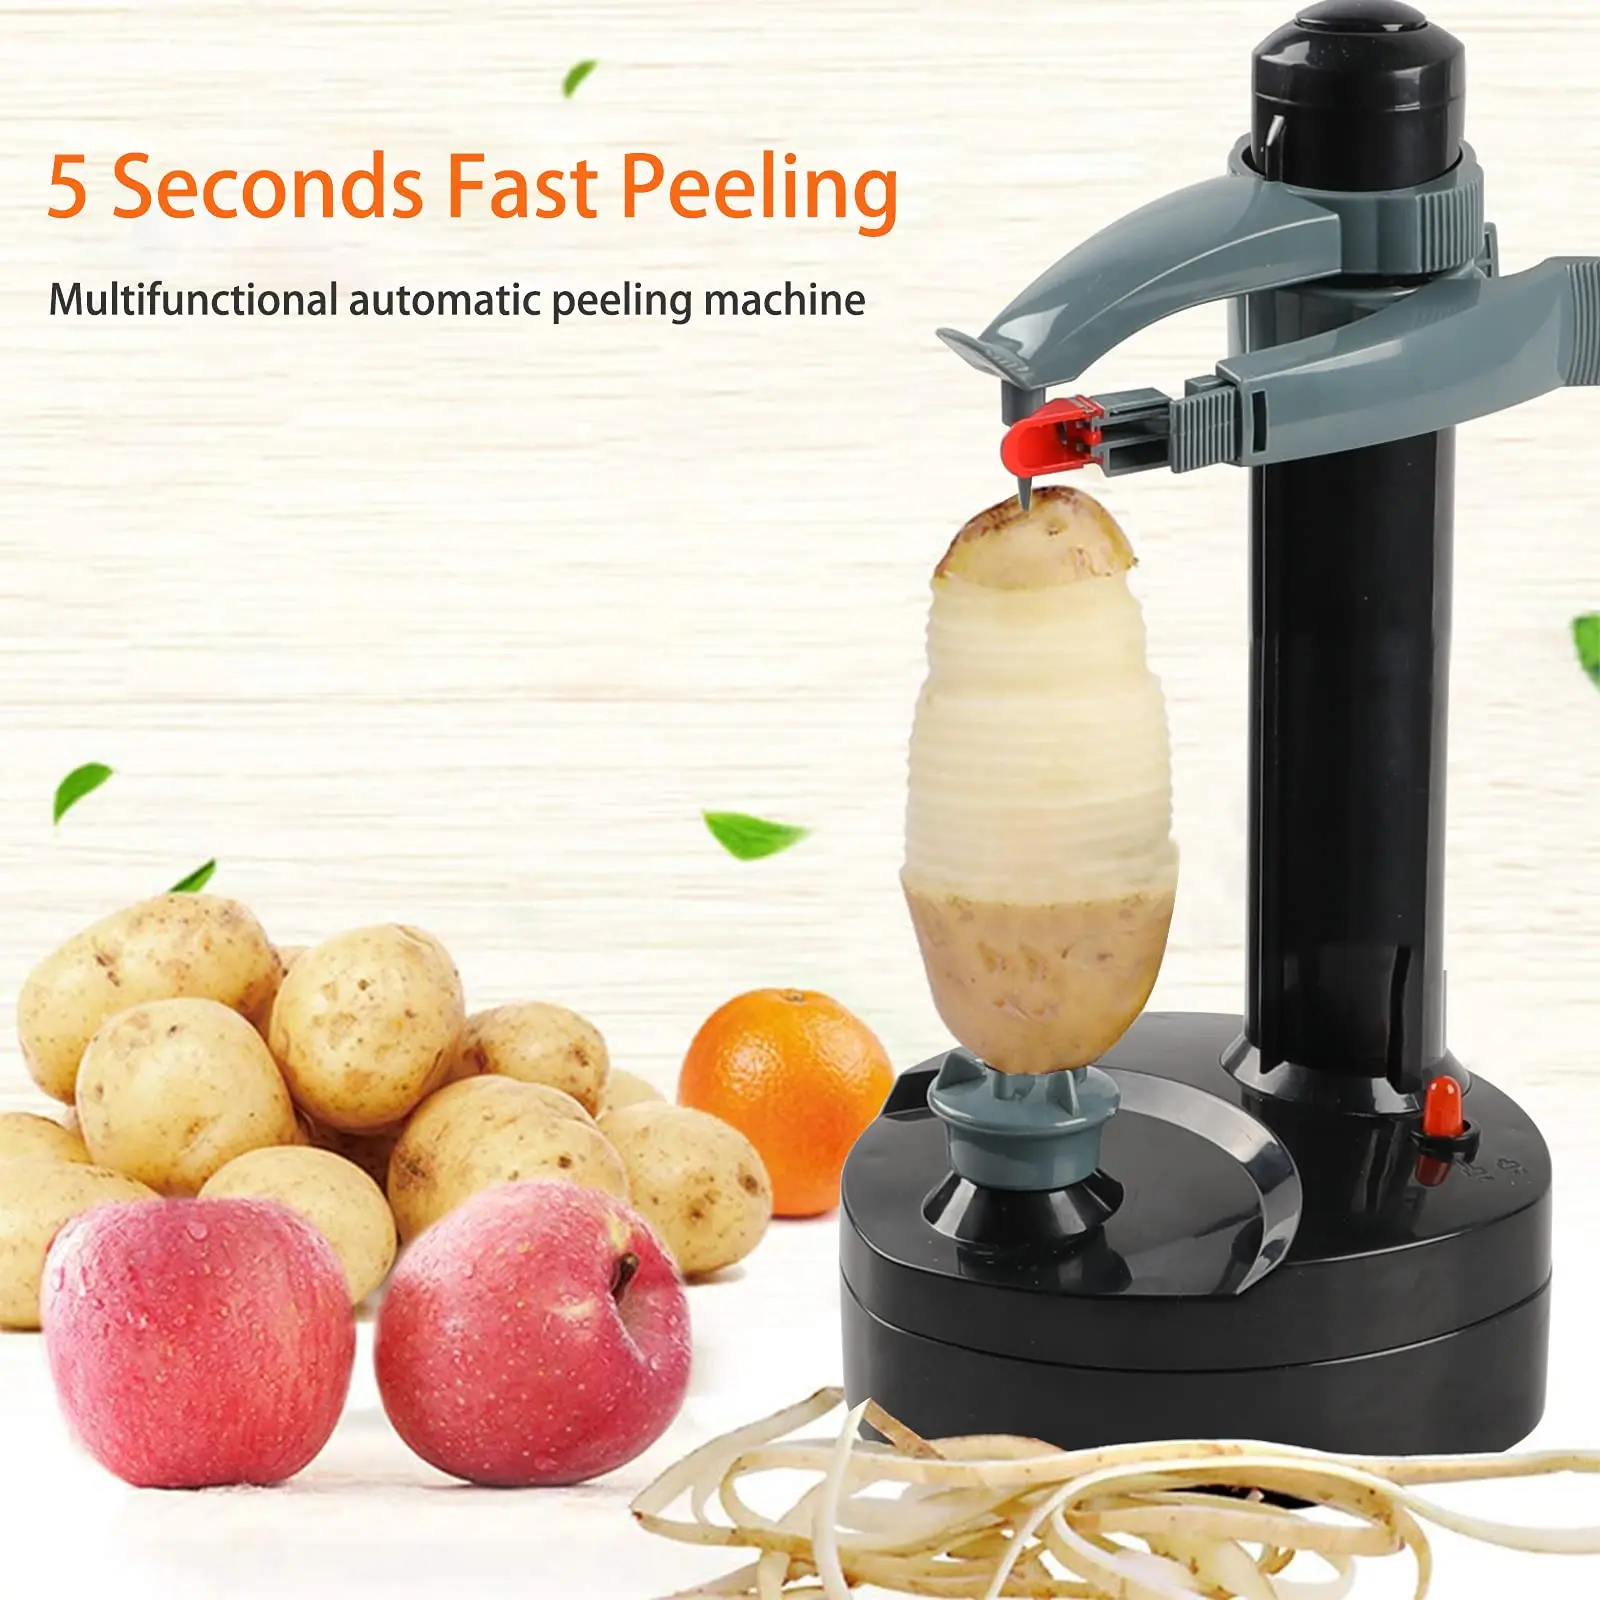 Smart Multifunctional Vegetable Fruit Peeler for Kitchen with Peel